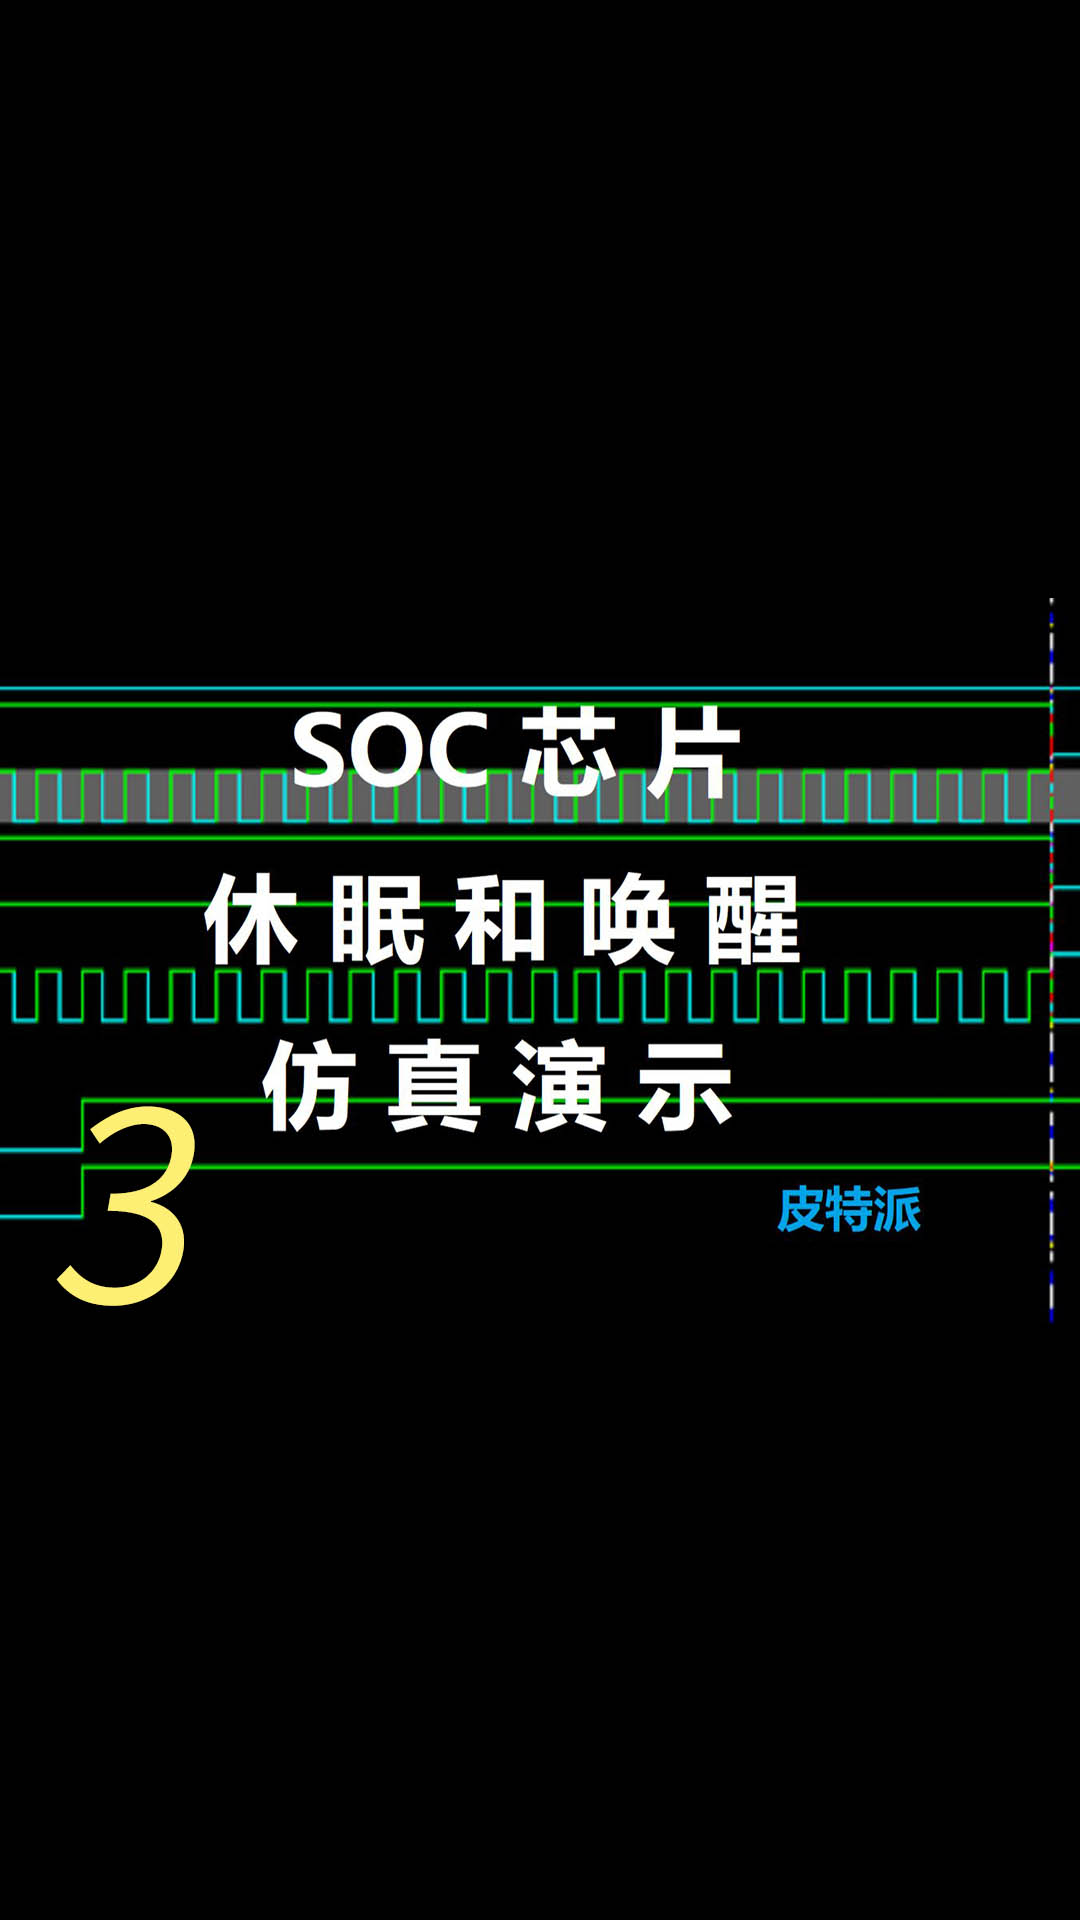 SoC芯片休眠和唤醒仿真演示 -3